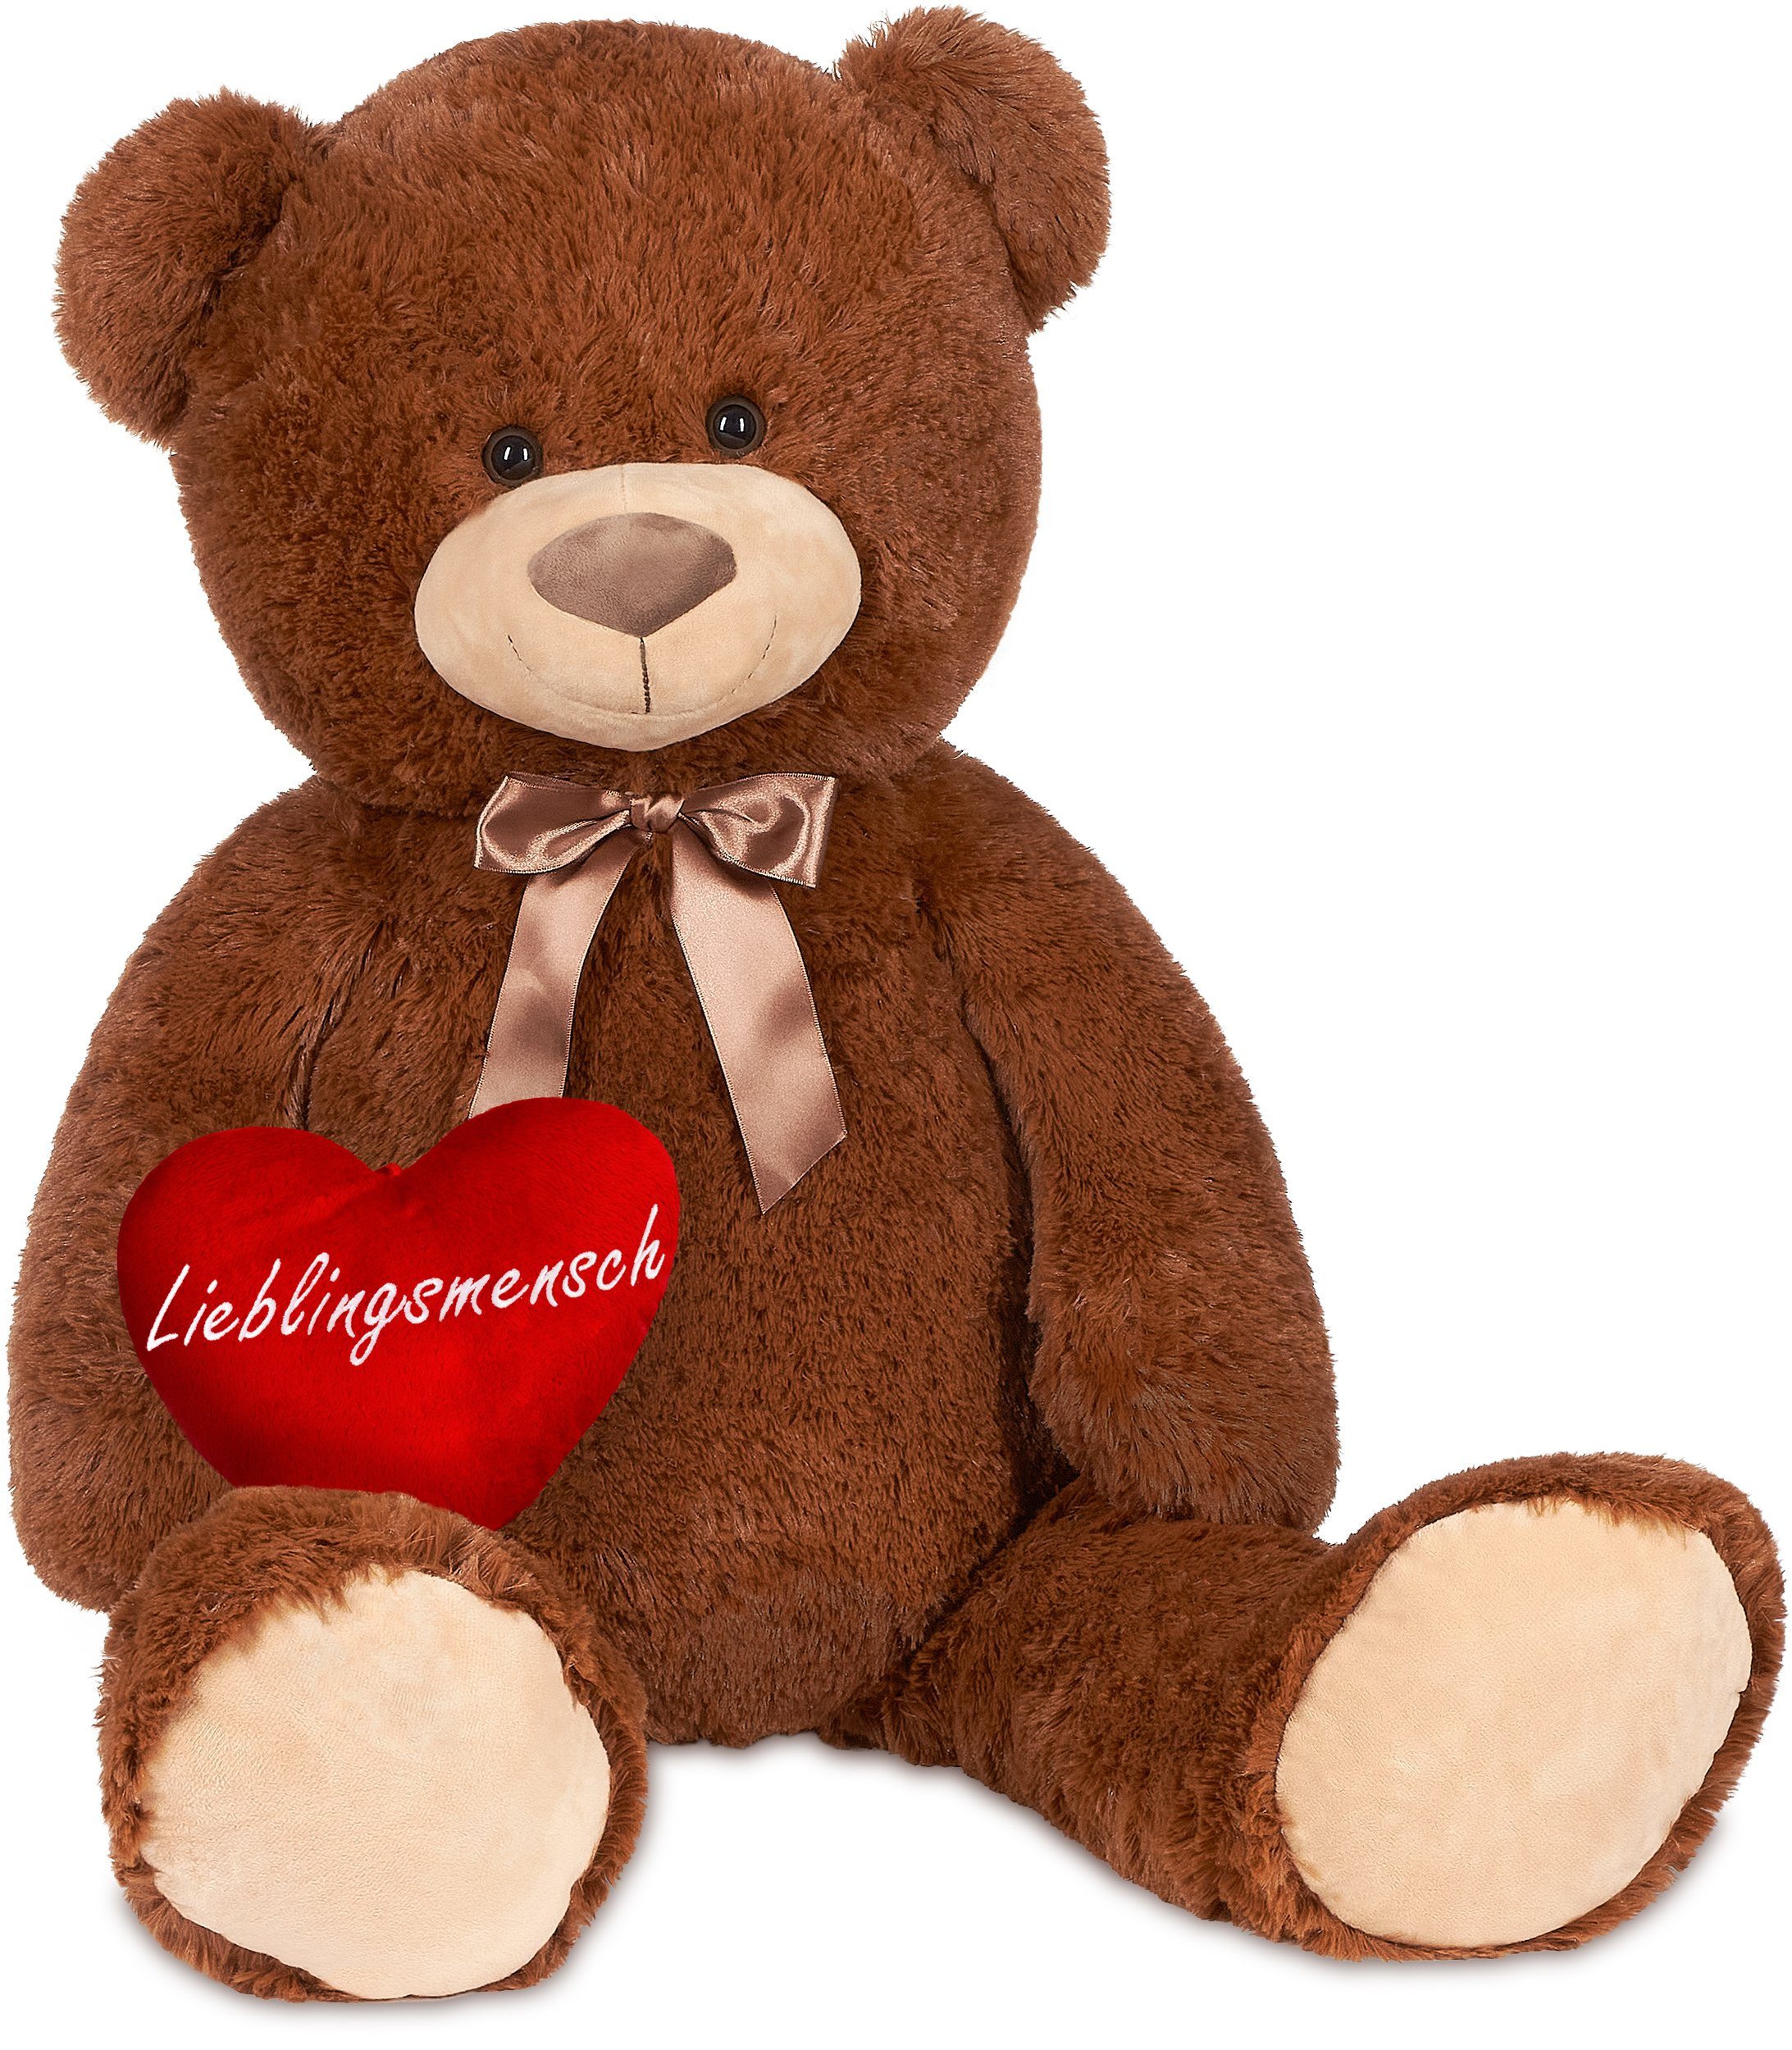 BRUBAKER Kuscheltier XXL Teddybär 100 cm groß mit Herz Lieblingsmensch  (1-St), großer Teddy Bär, Stofftier Plüschtier